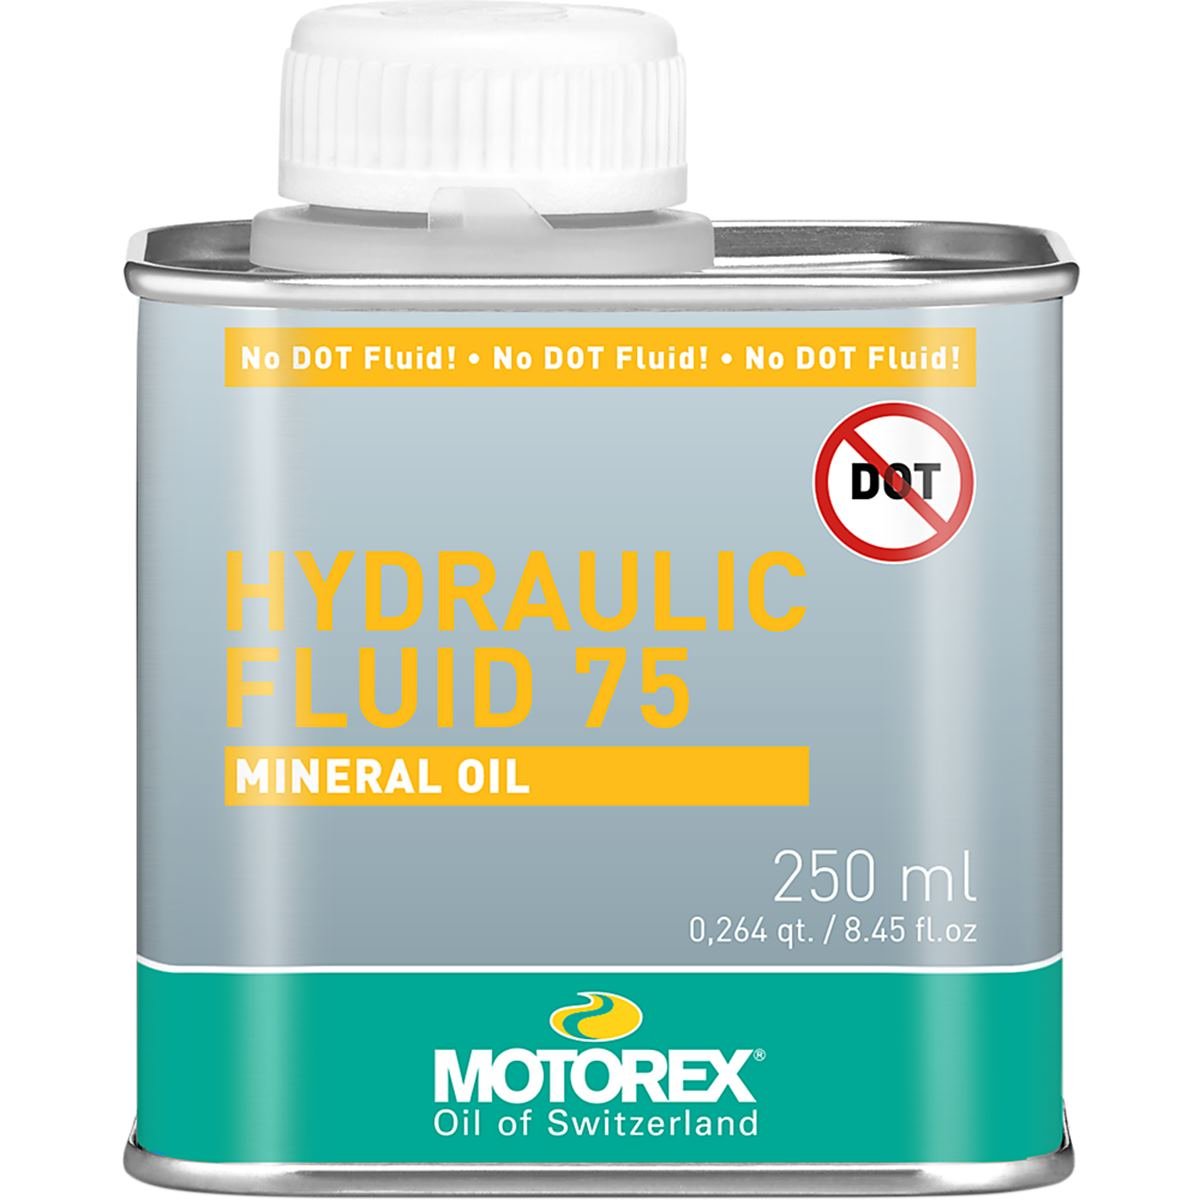 Motorex Olio minerale Fluid 75 250 ml